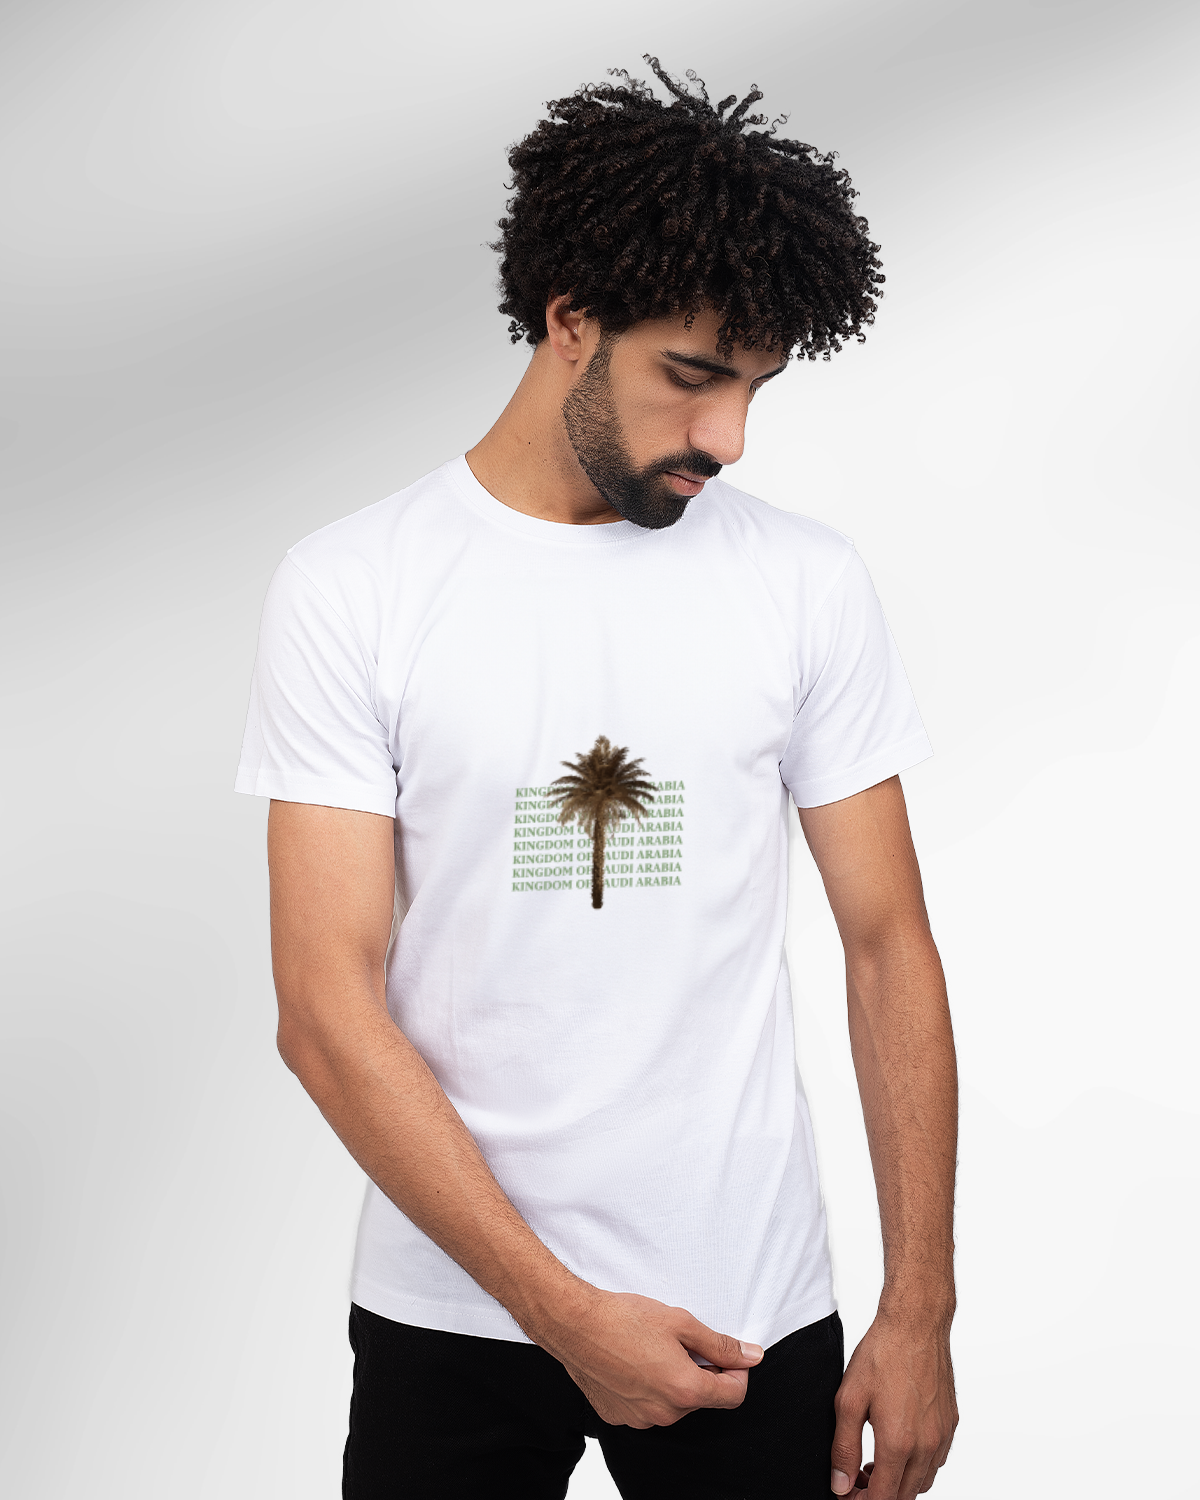 Men's Foundation Day T-shirt (Palm Tree)